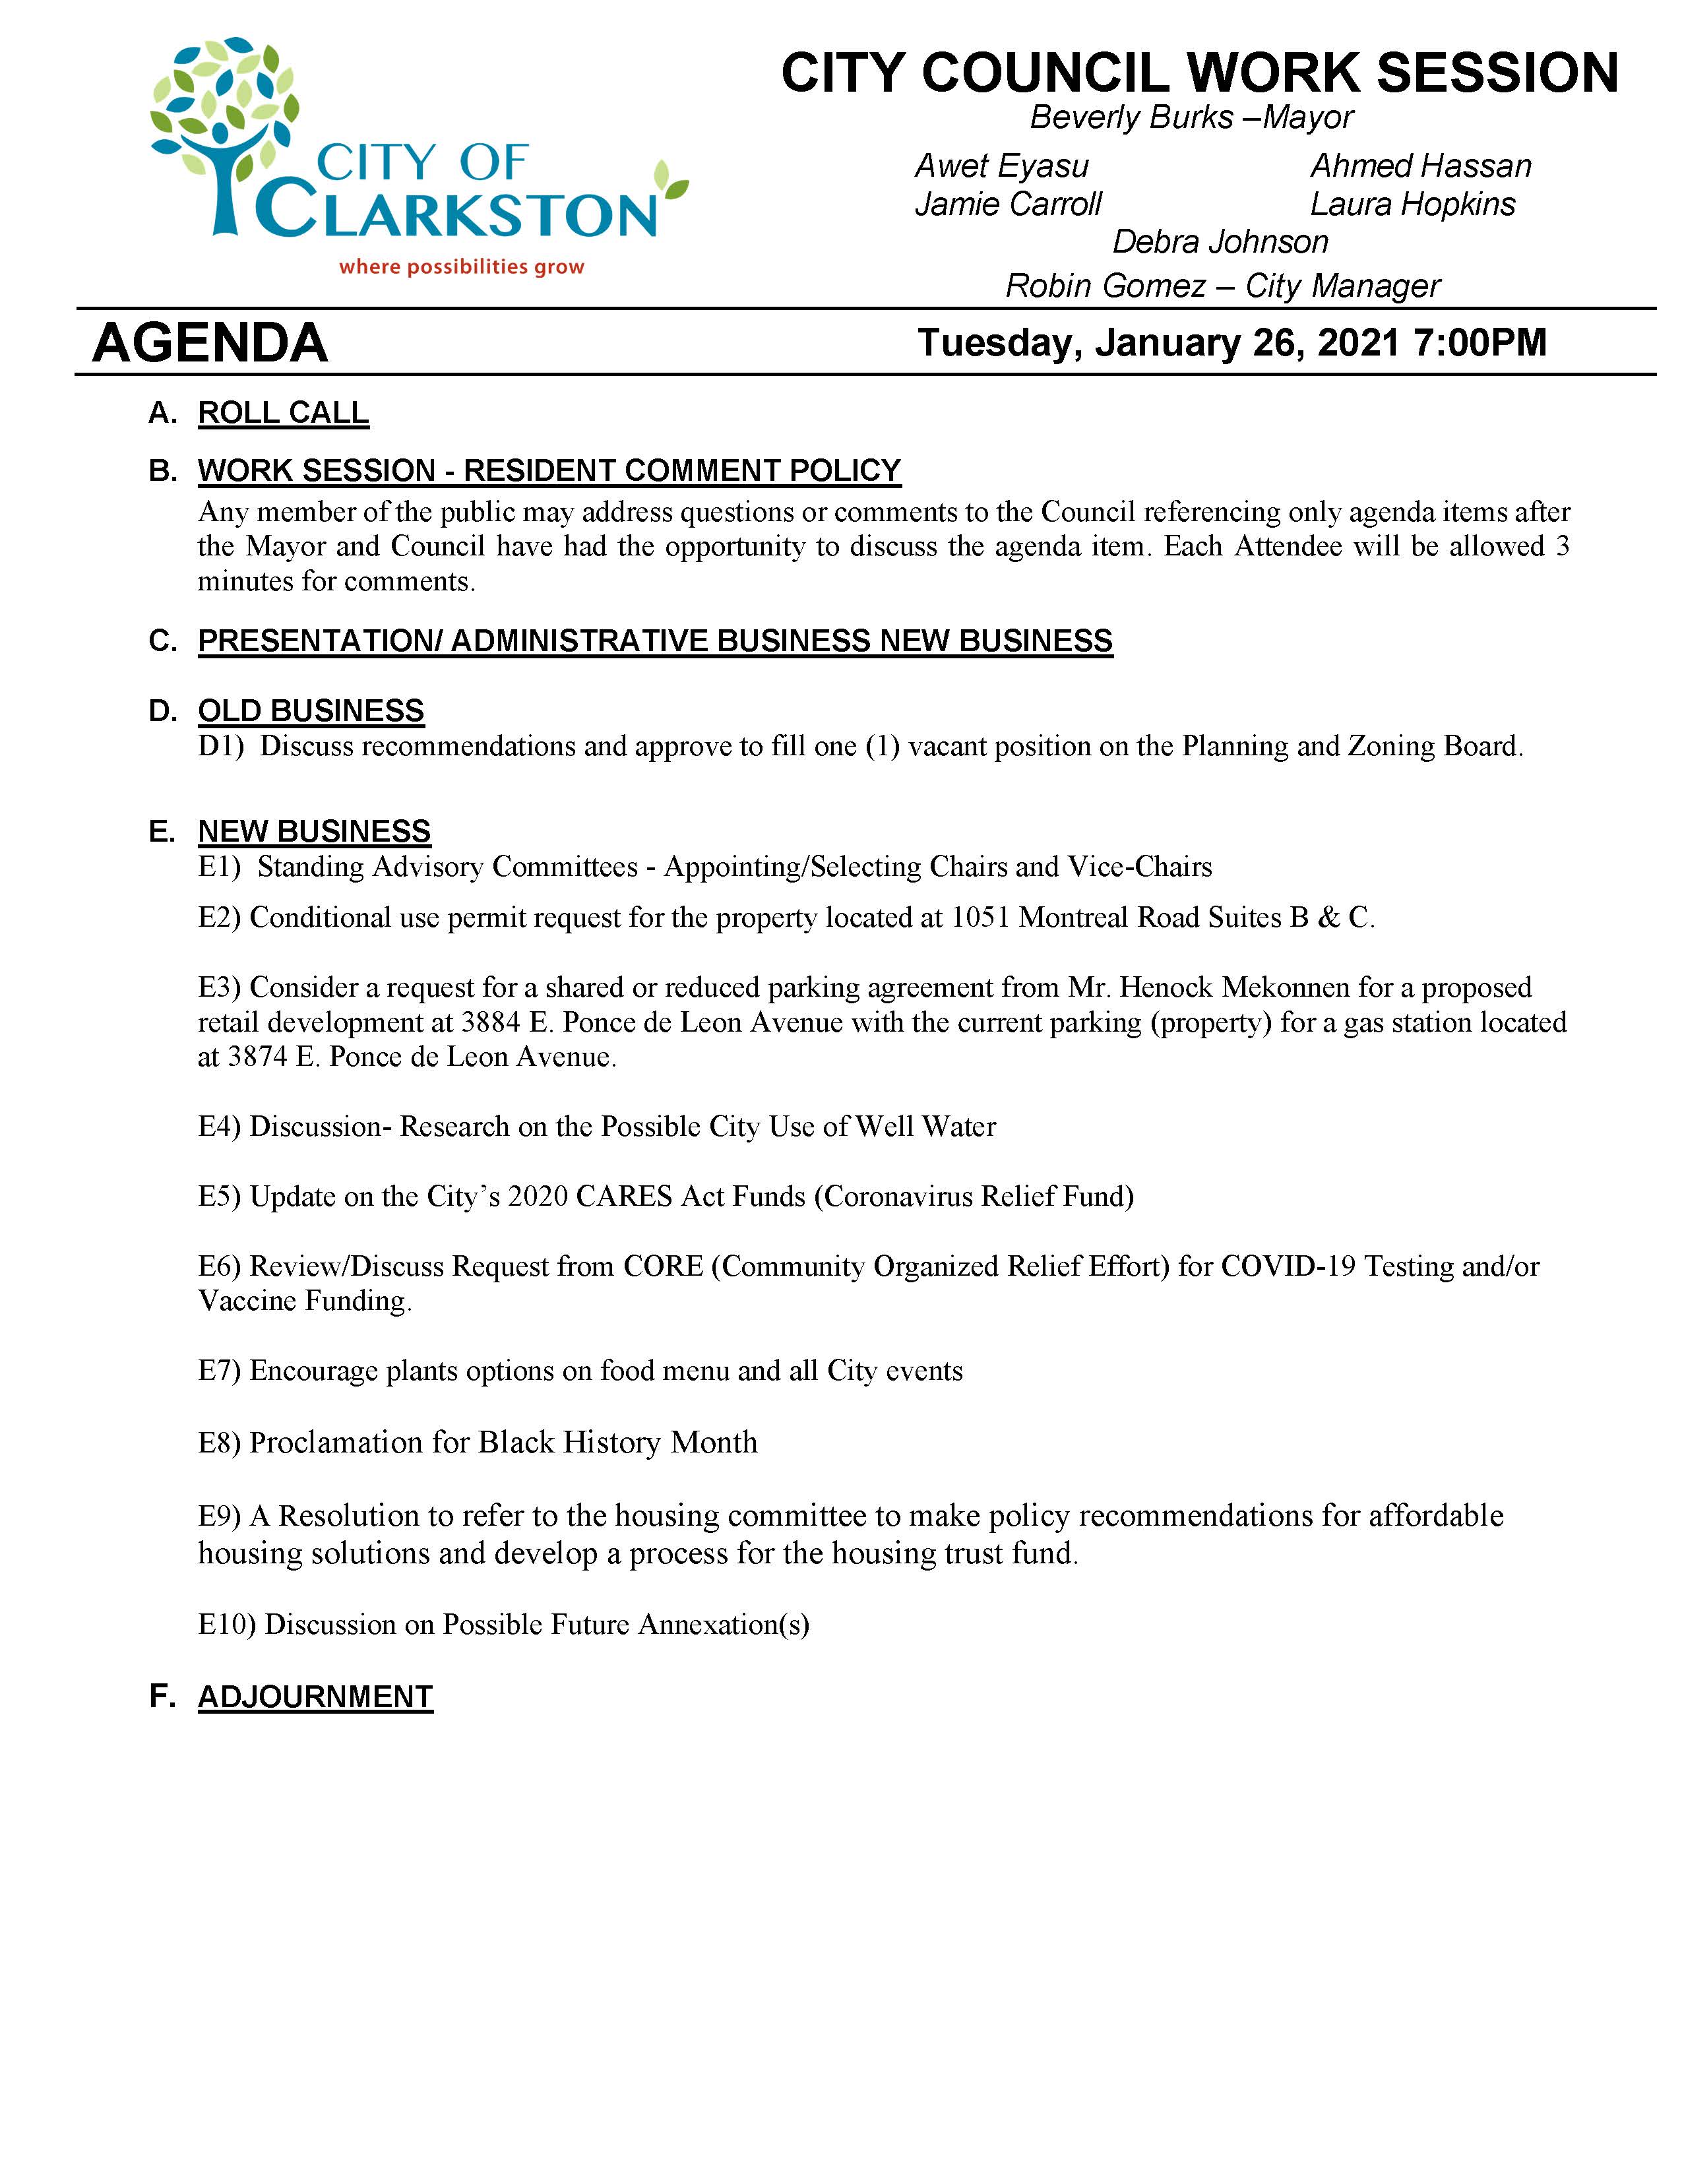 work session agenda 1-26-2021